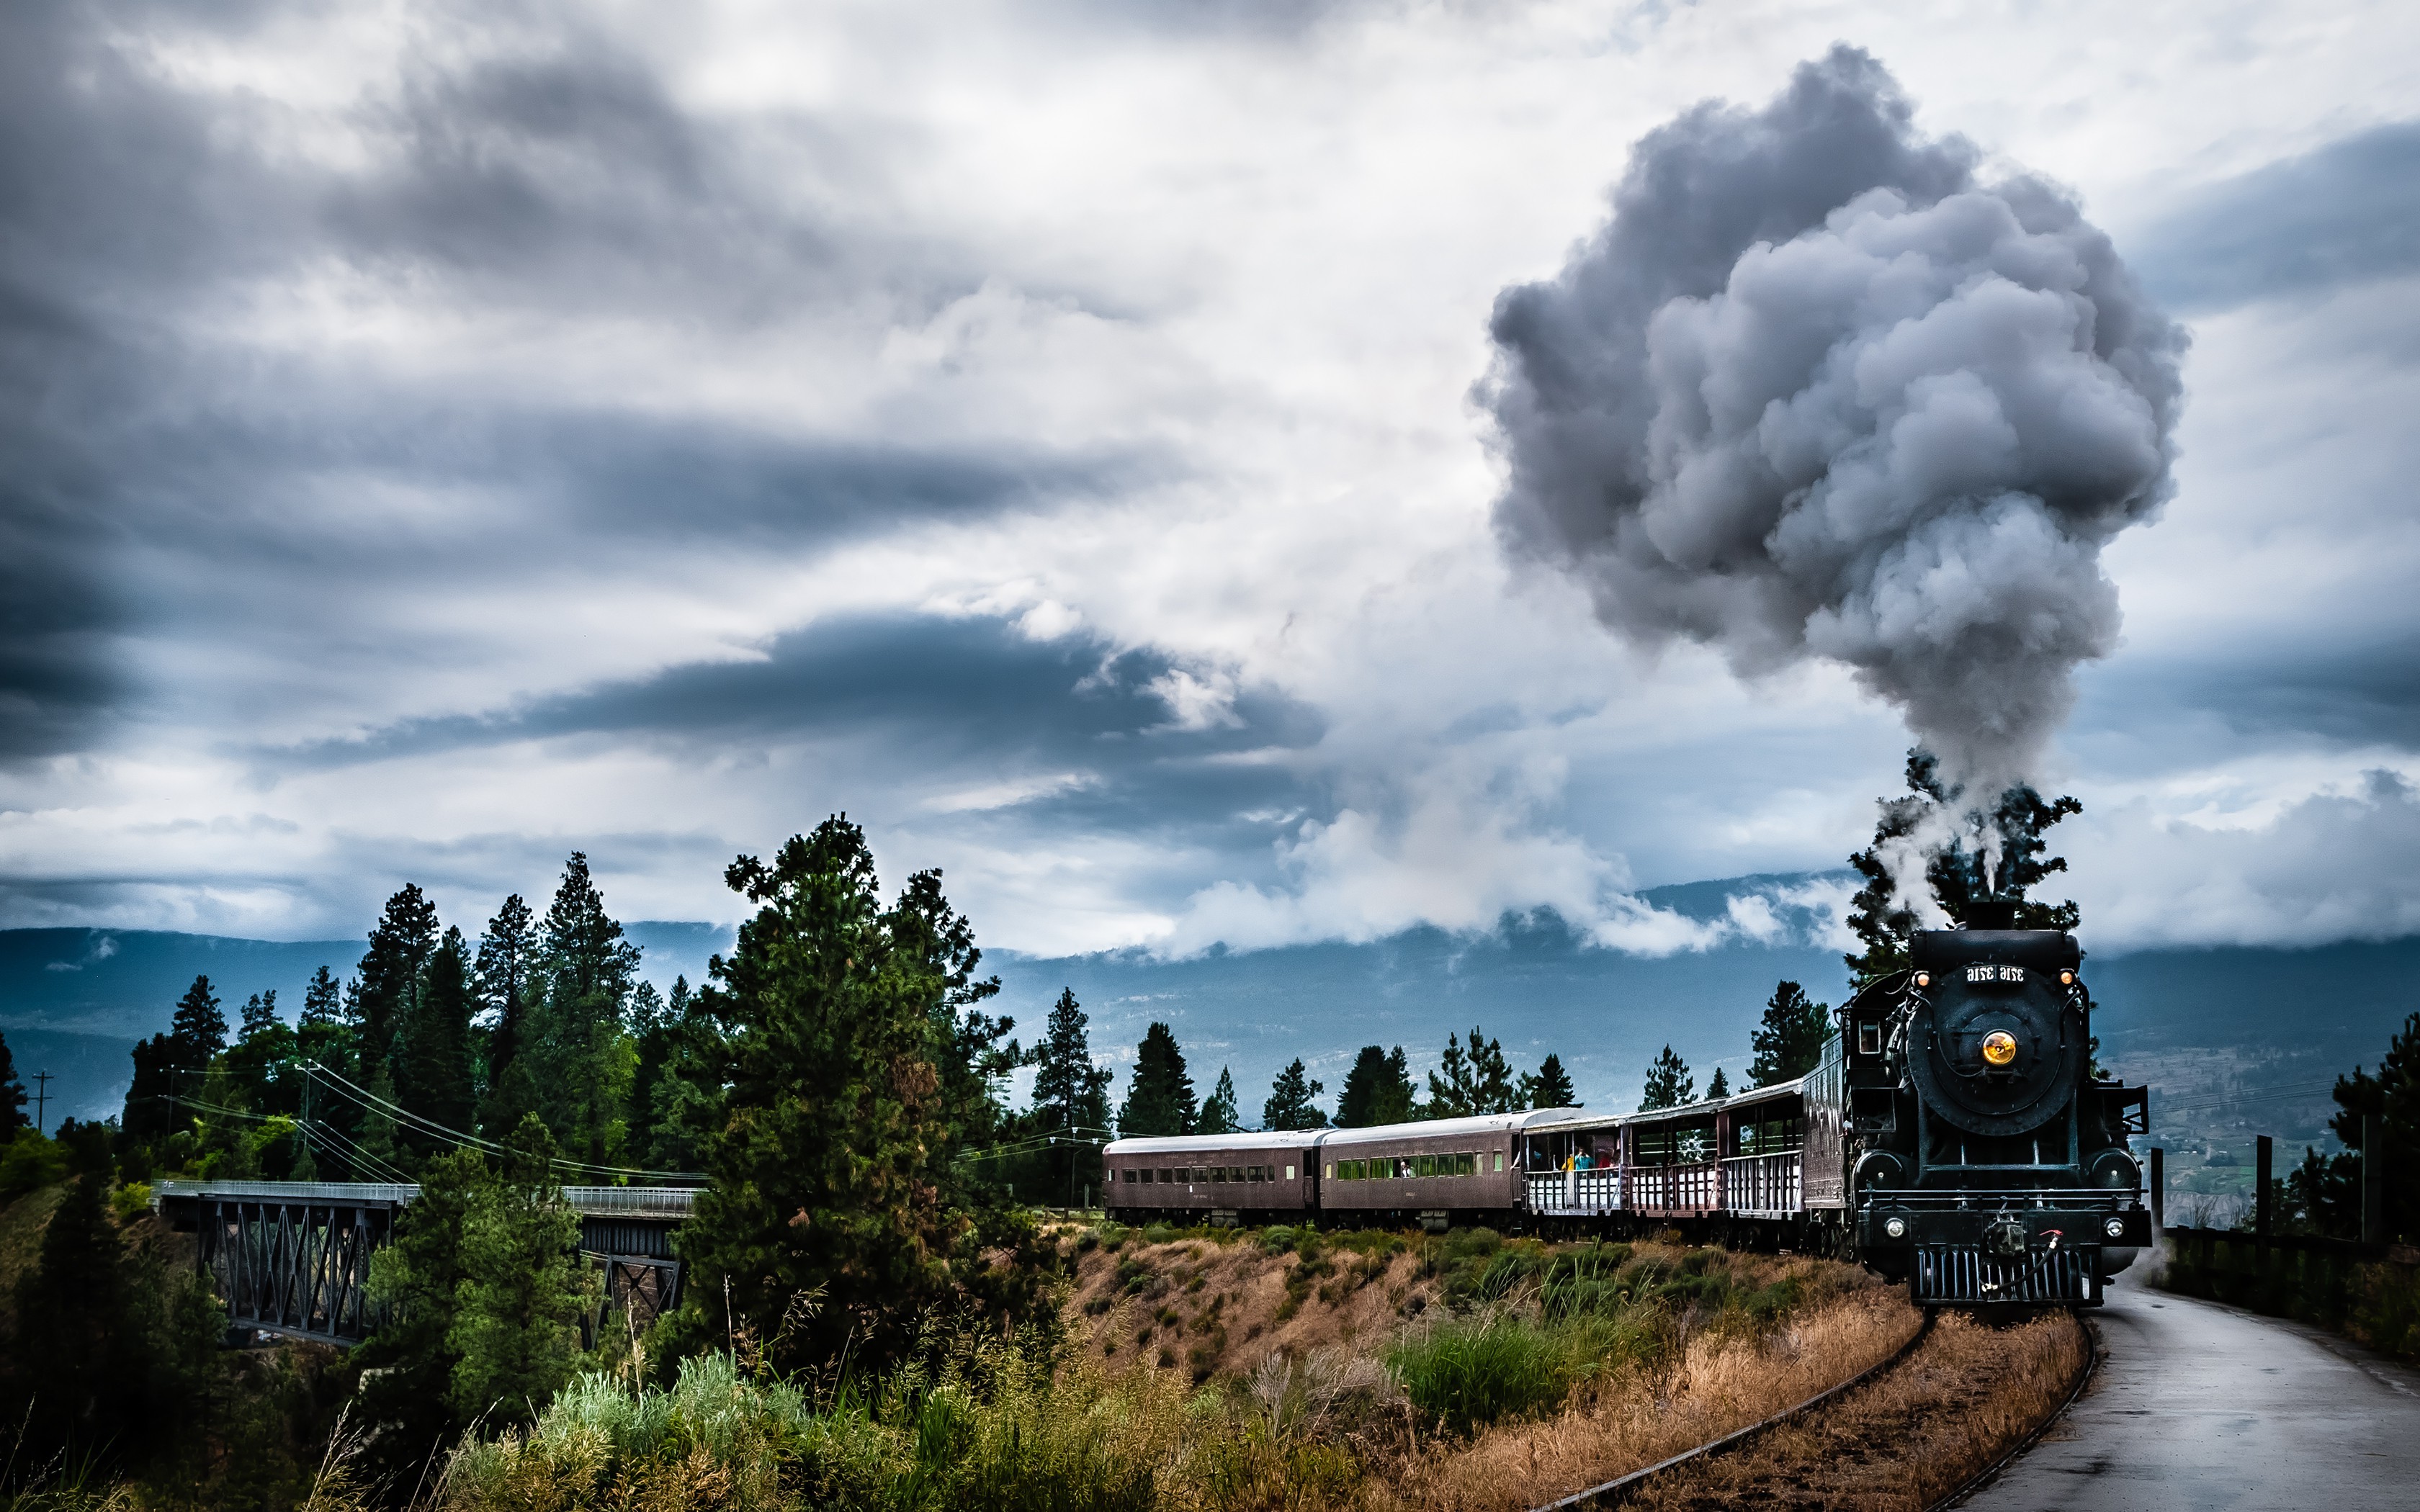 nature, Landscape, Train, Machine, Smoke, Trees, Clouds, Bridge, Railway,  Mountain, Steam Locomotive Wallpapers HD / Desktop and Mobile Backgrounds